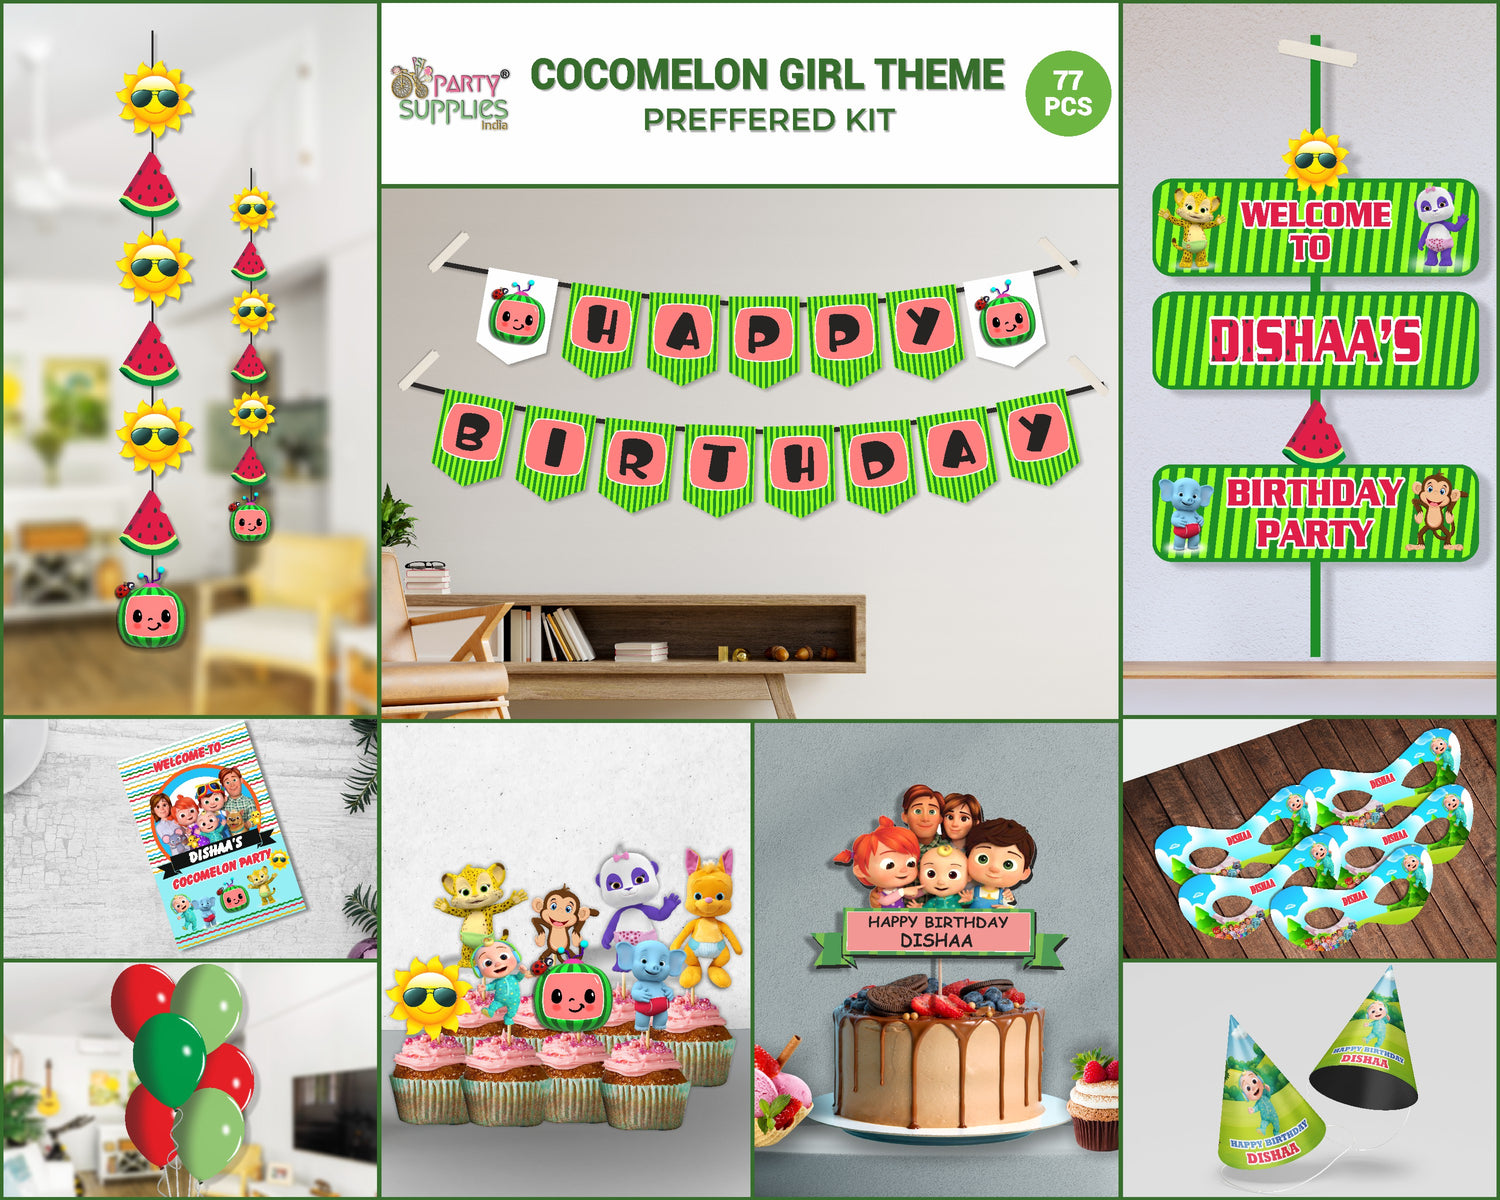 PSI Coco Melon Girl Theme Preferred Kit